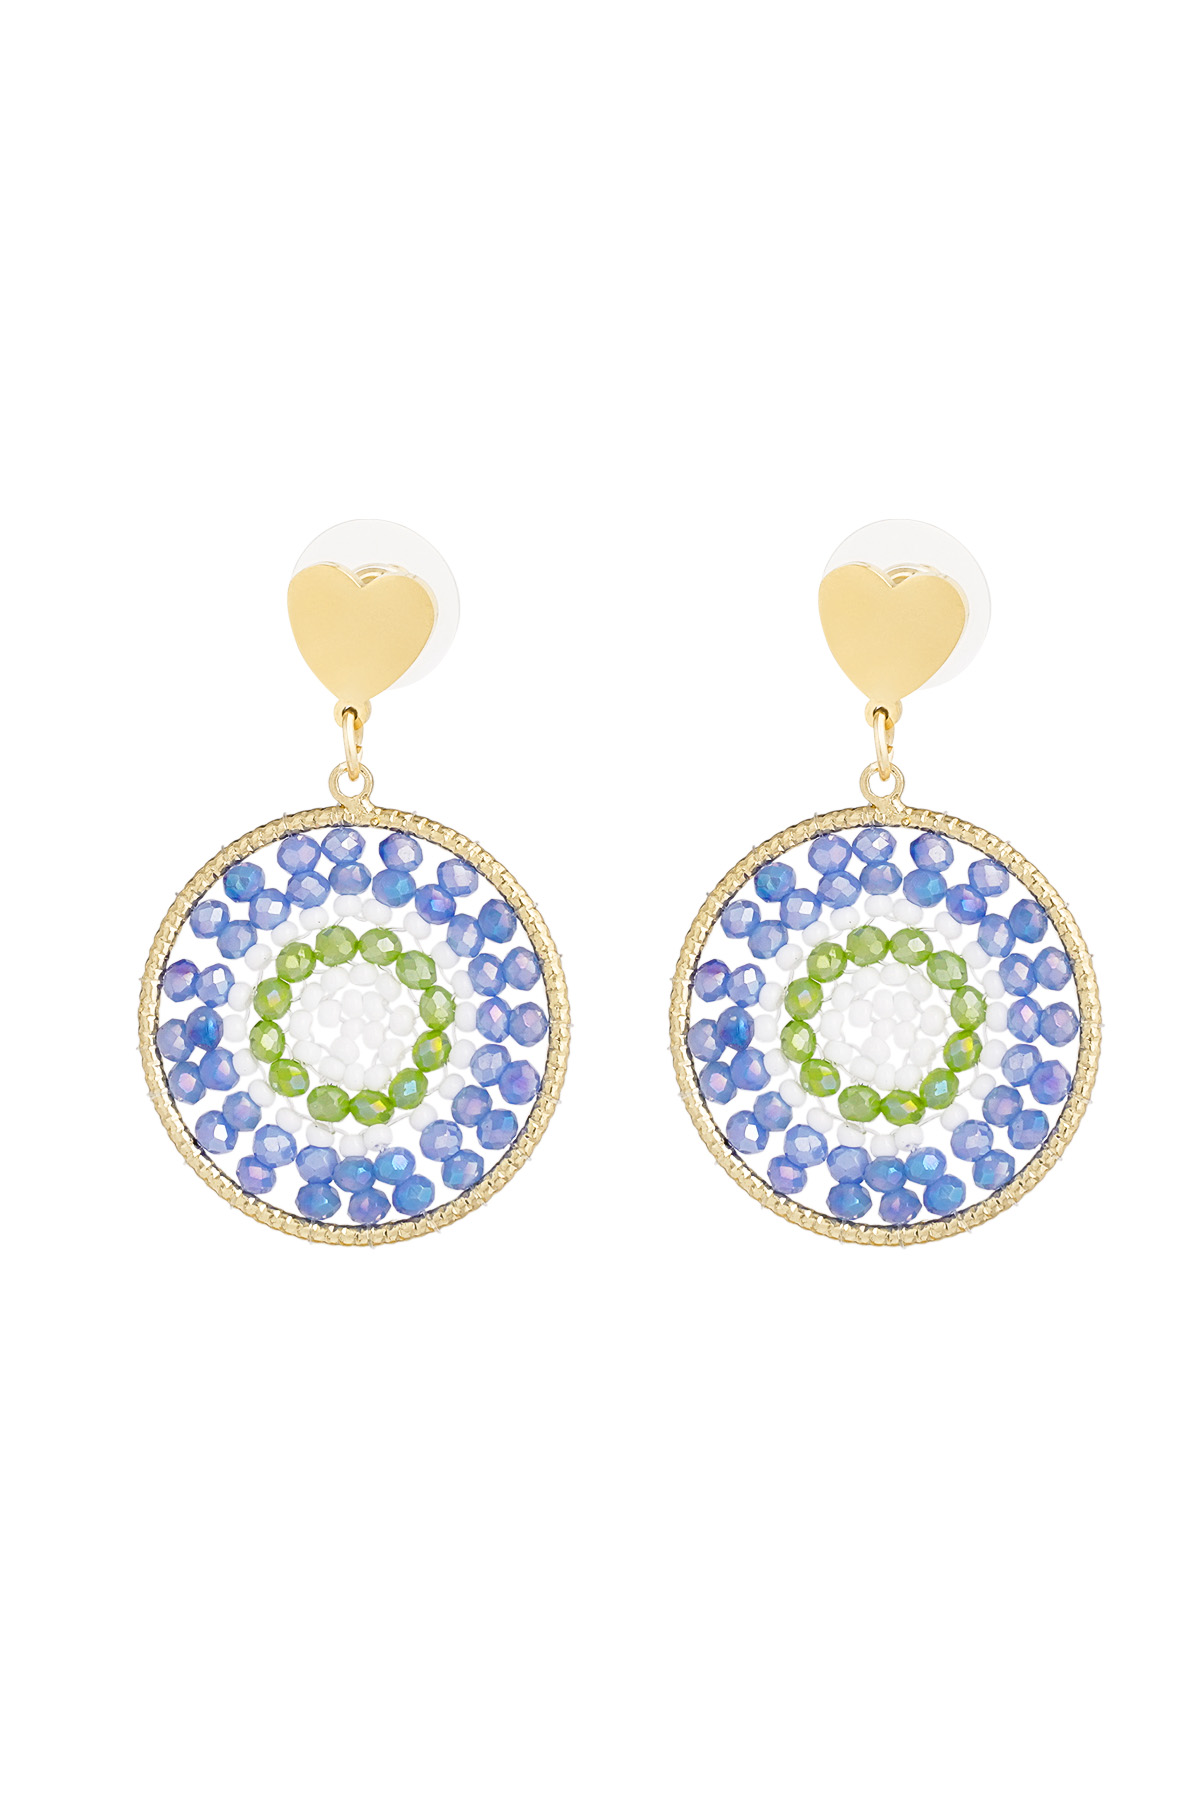 Mandala-Ohrringe mit Herz - blau/grün 